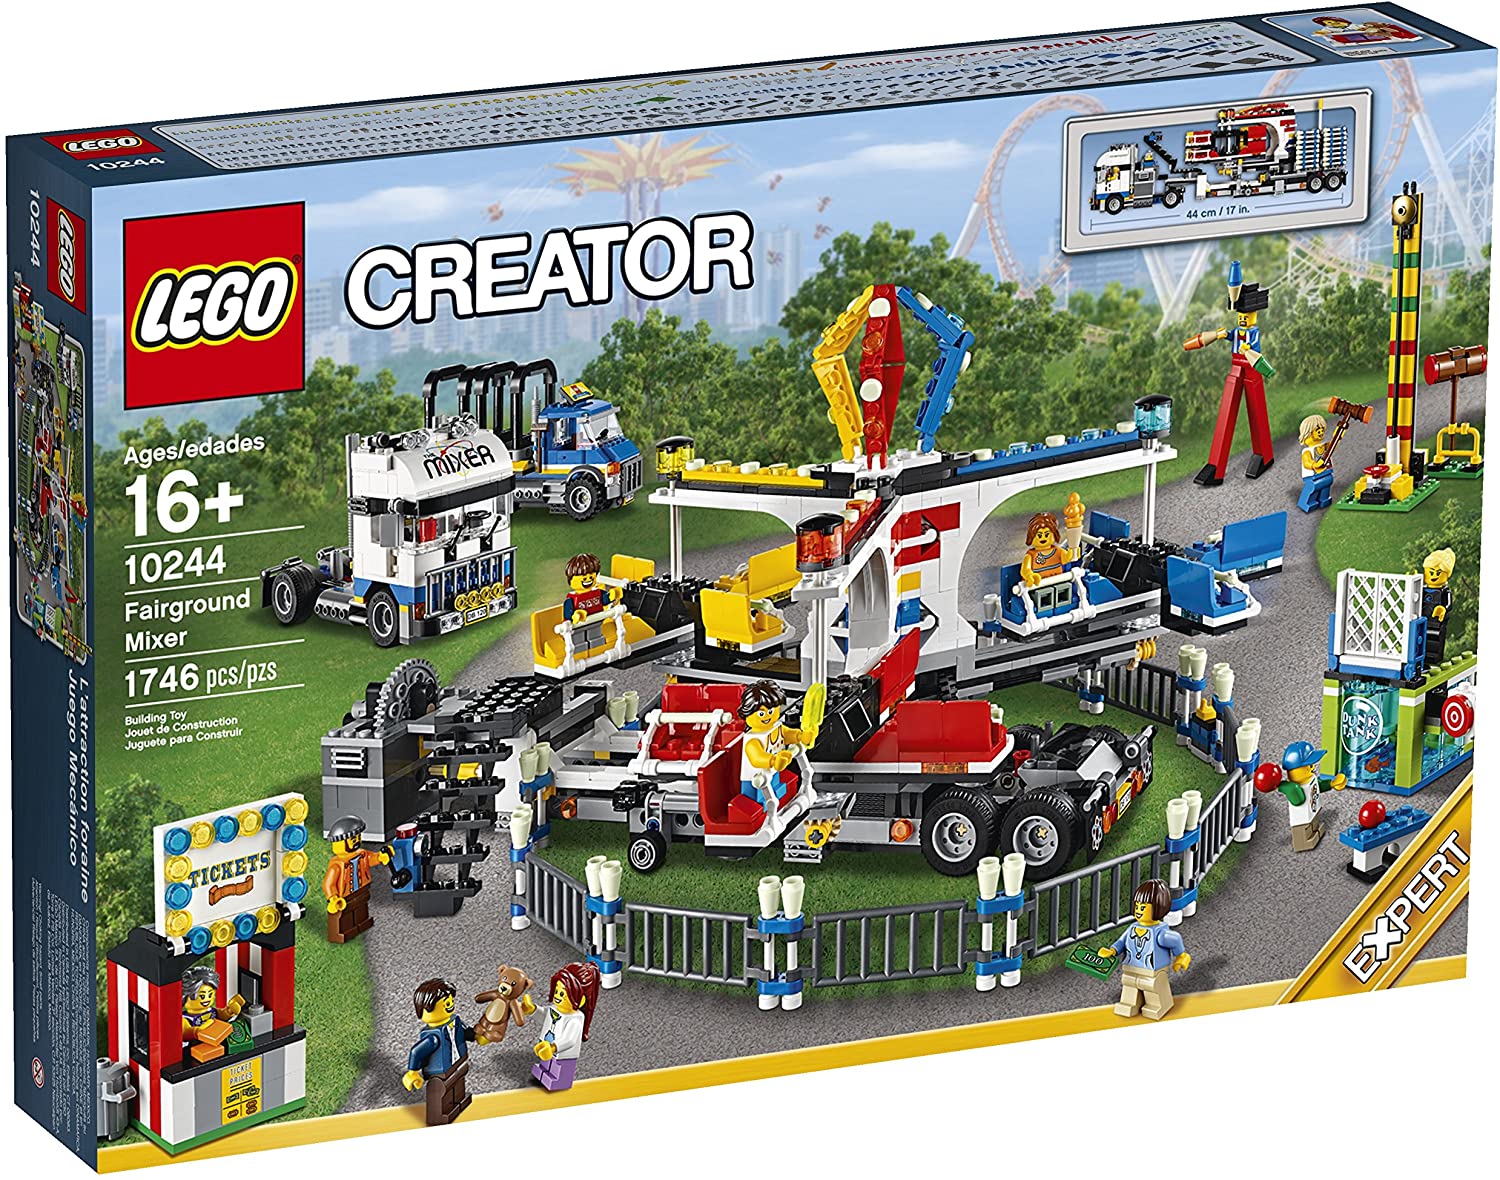 LEGO Creator Fairgrounds Mixer Set 10244 - US